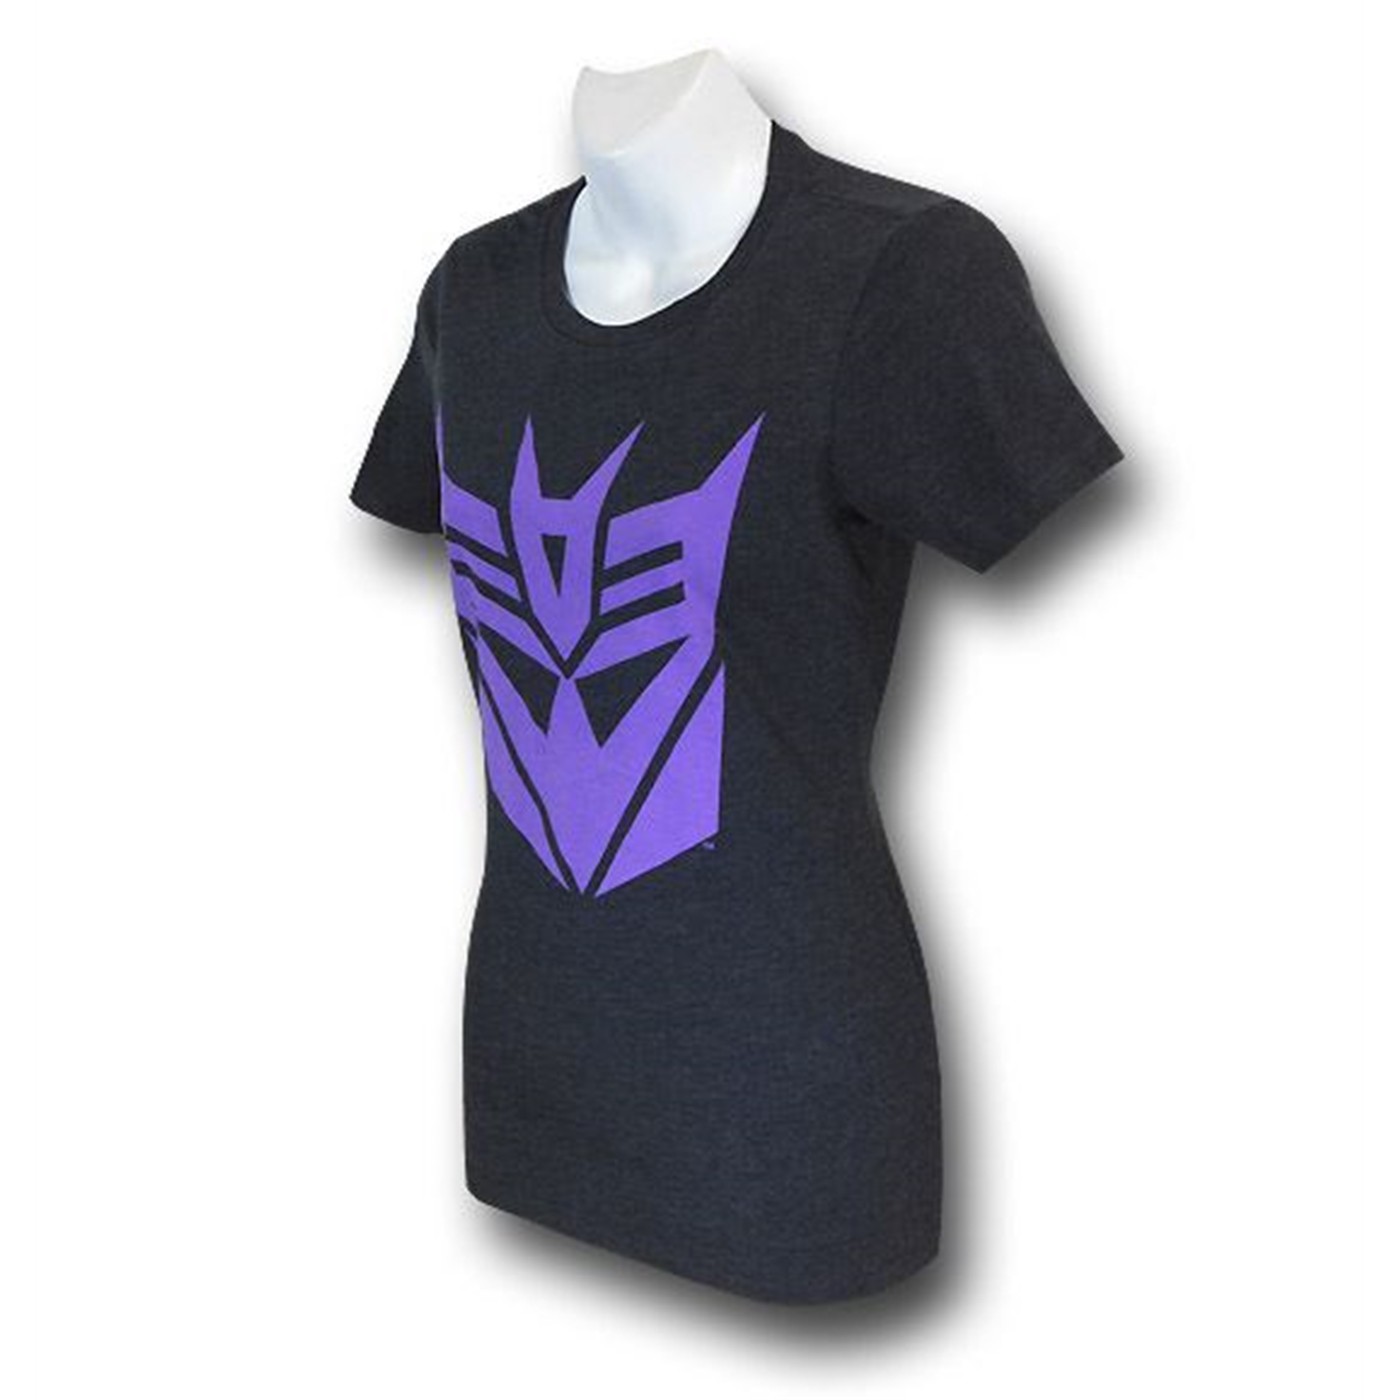 Transformers Decepticon Symbol Women's T-Shirt